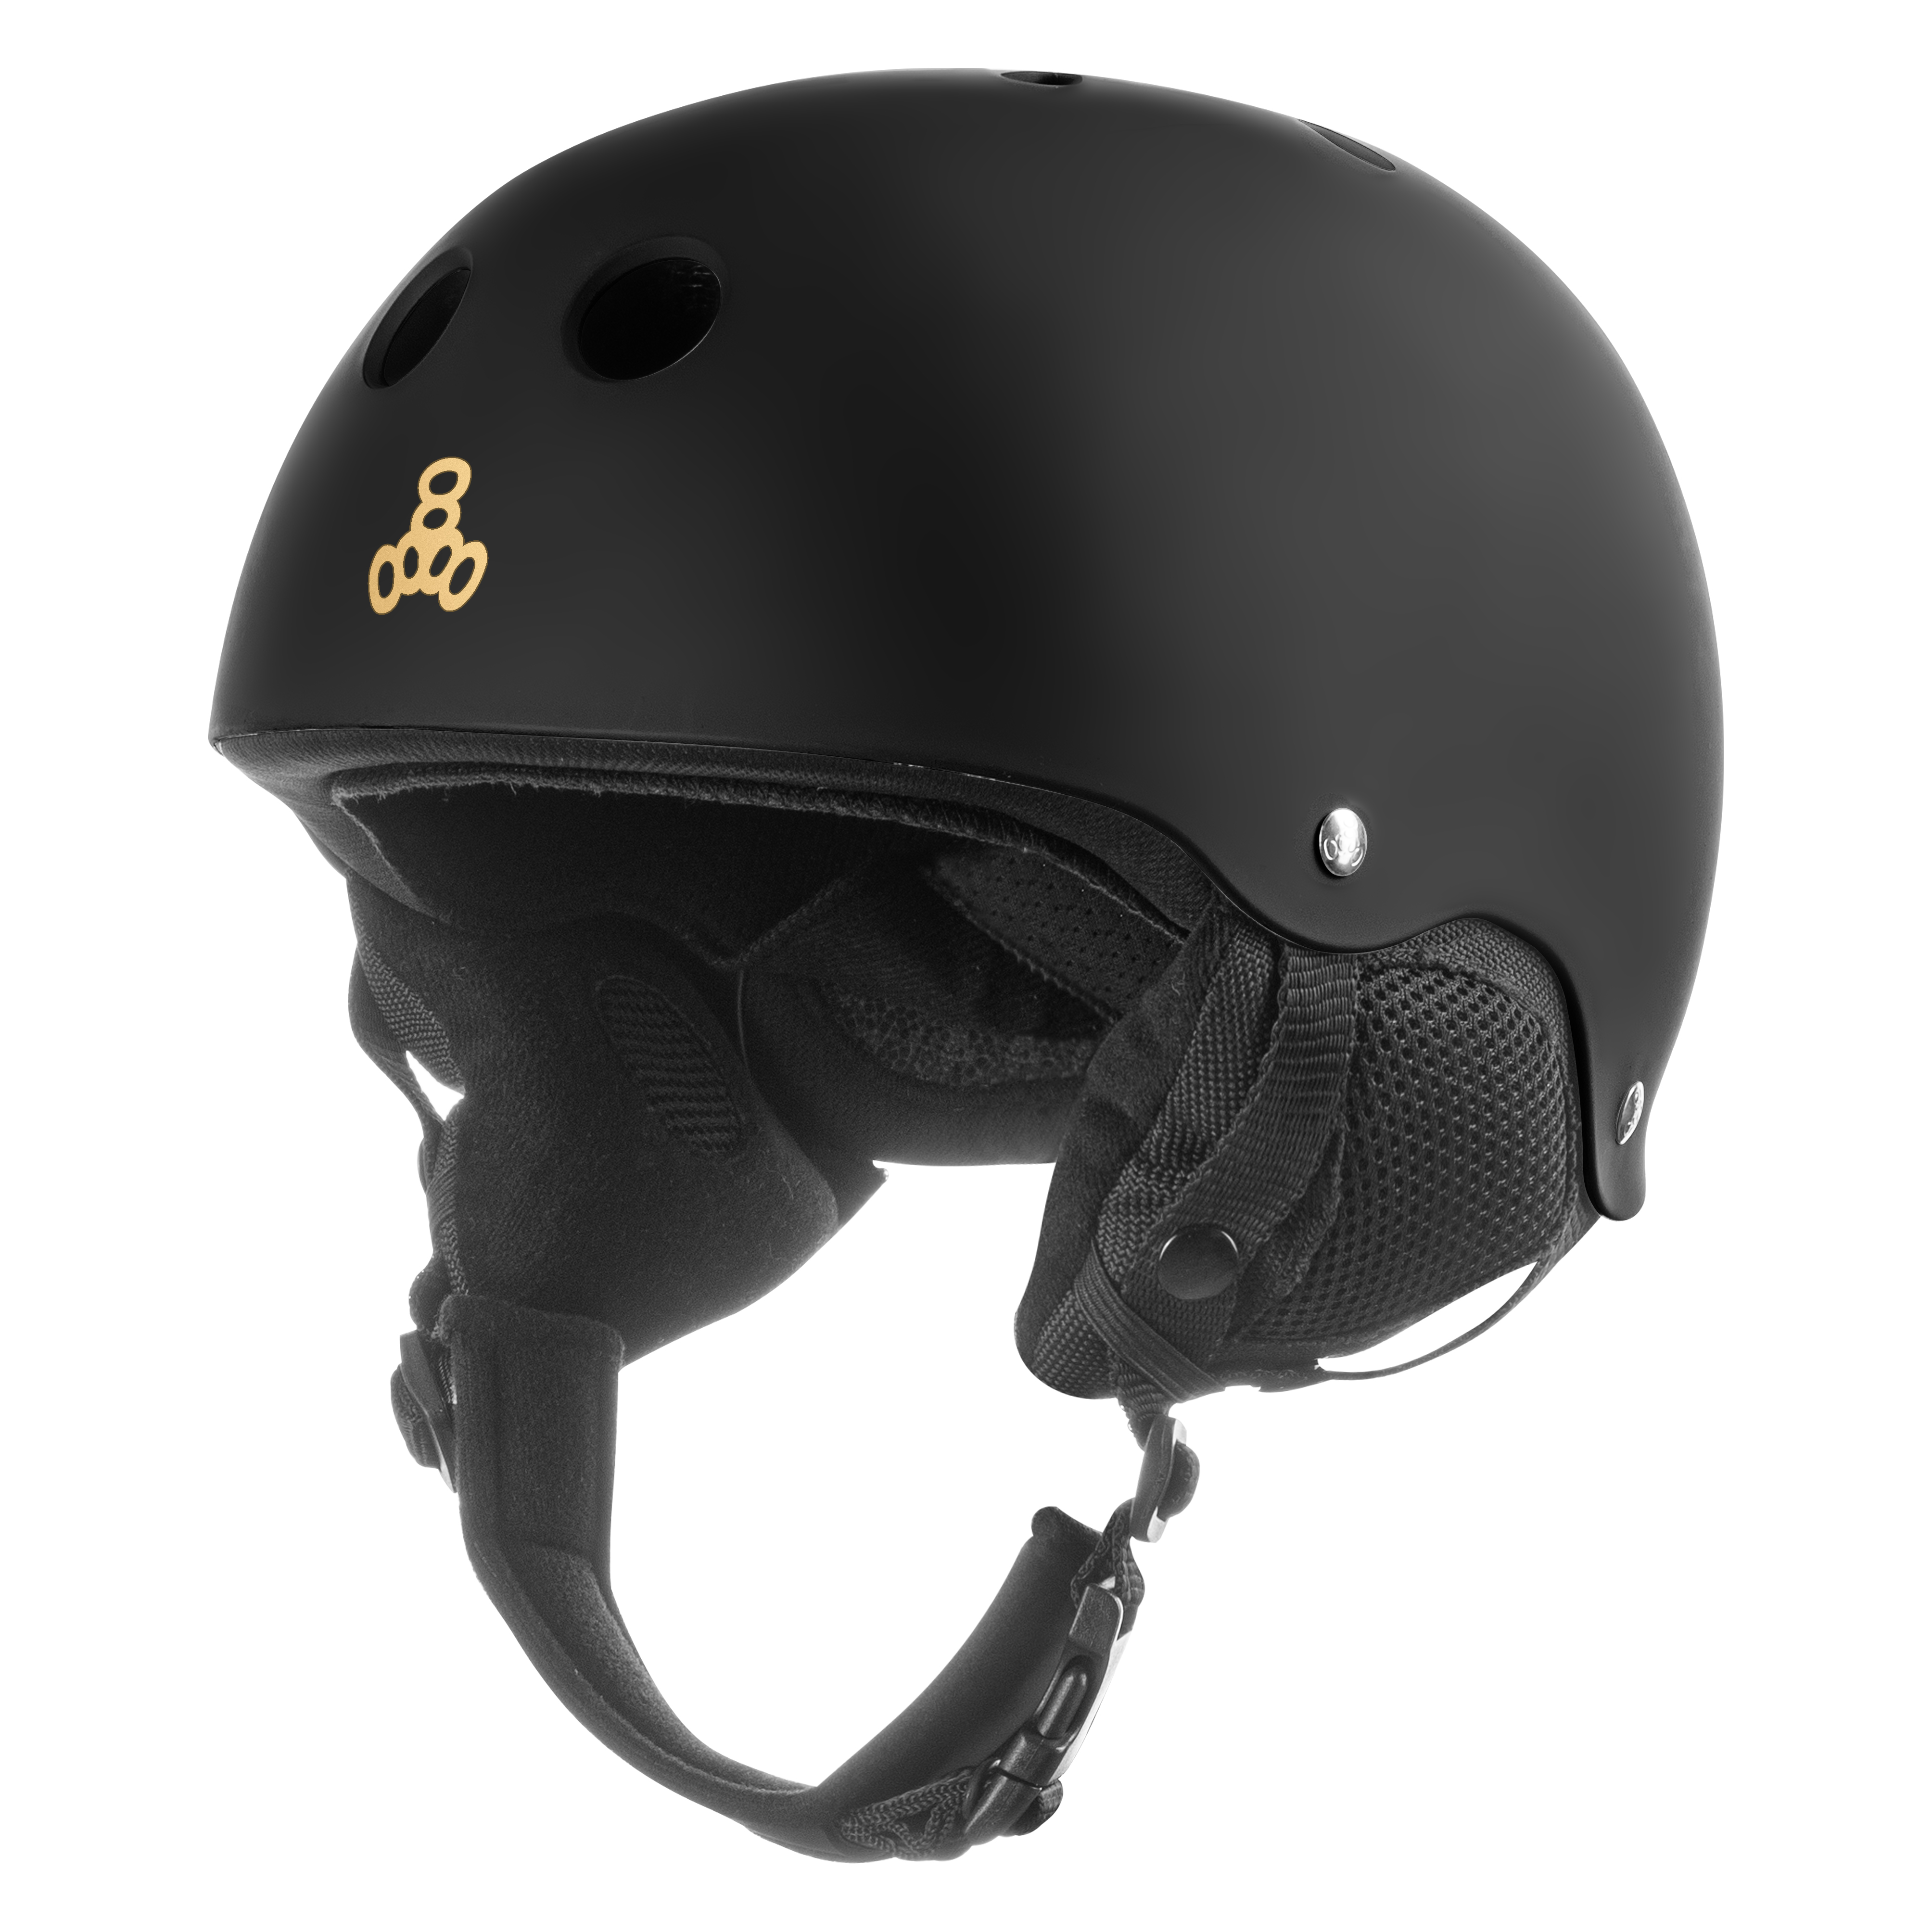 Защитный шлем для детей Triple8 Old School Snow Black Rubber (XS)